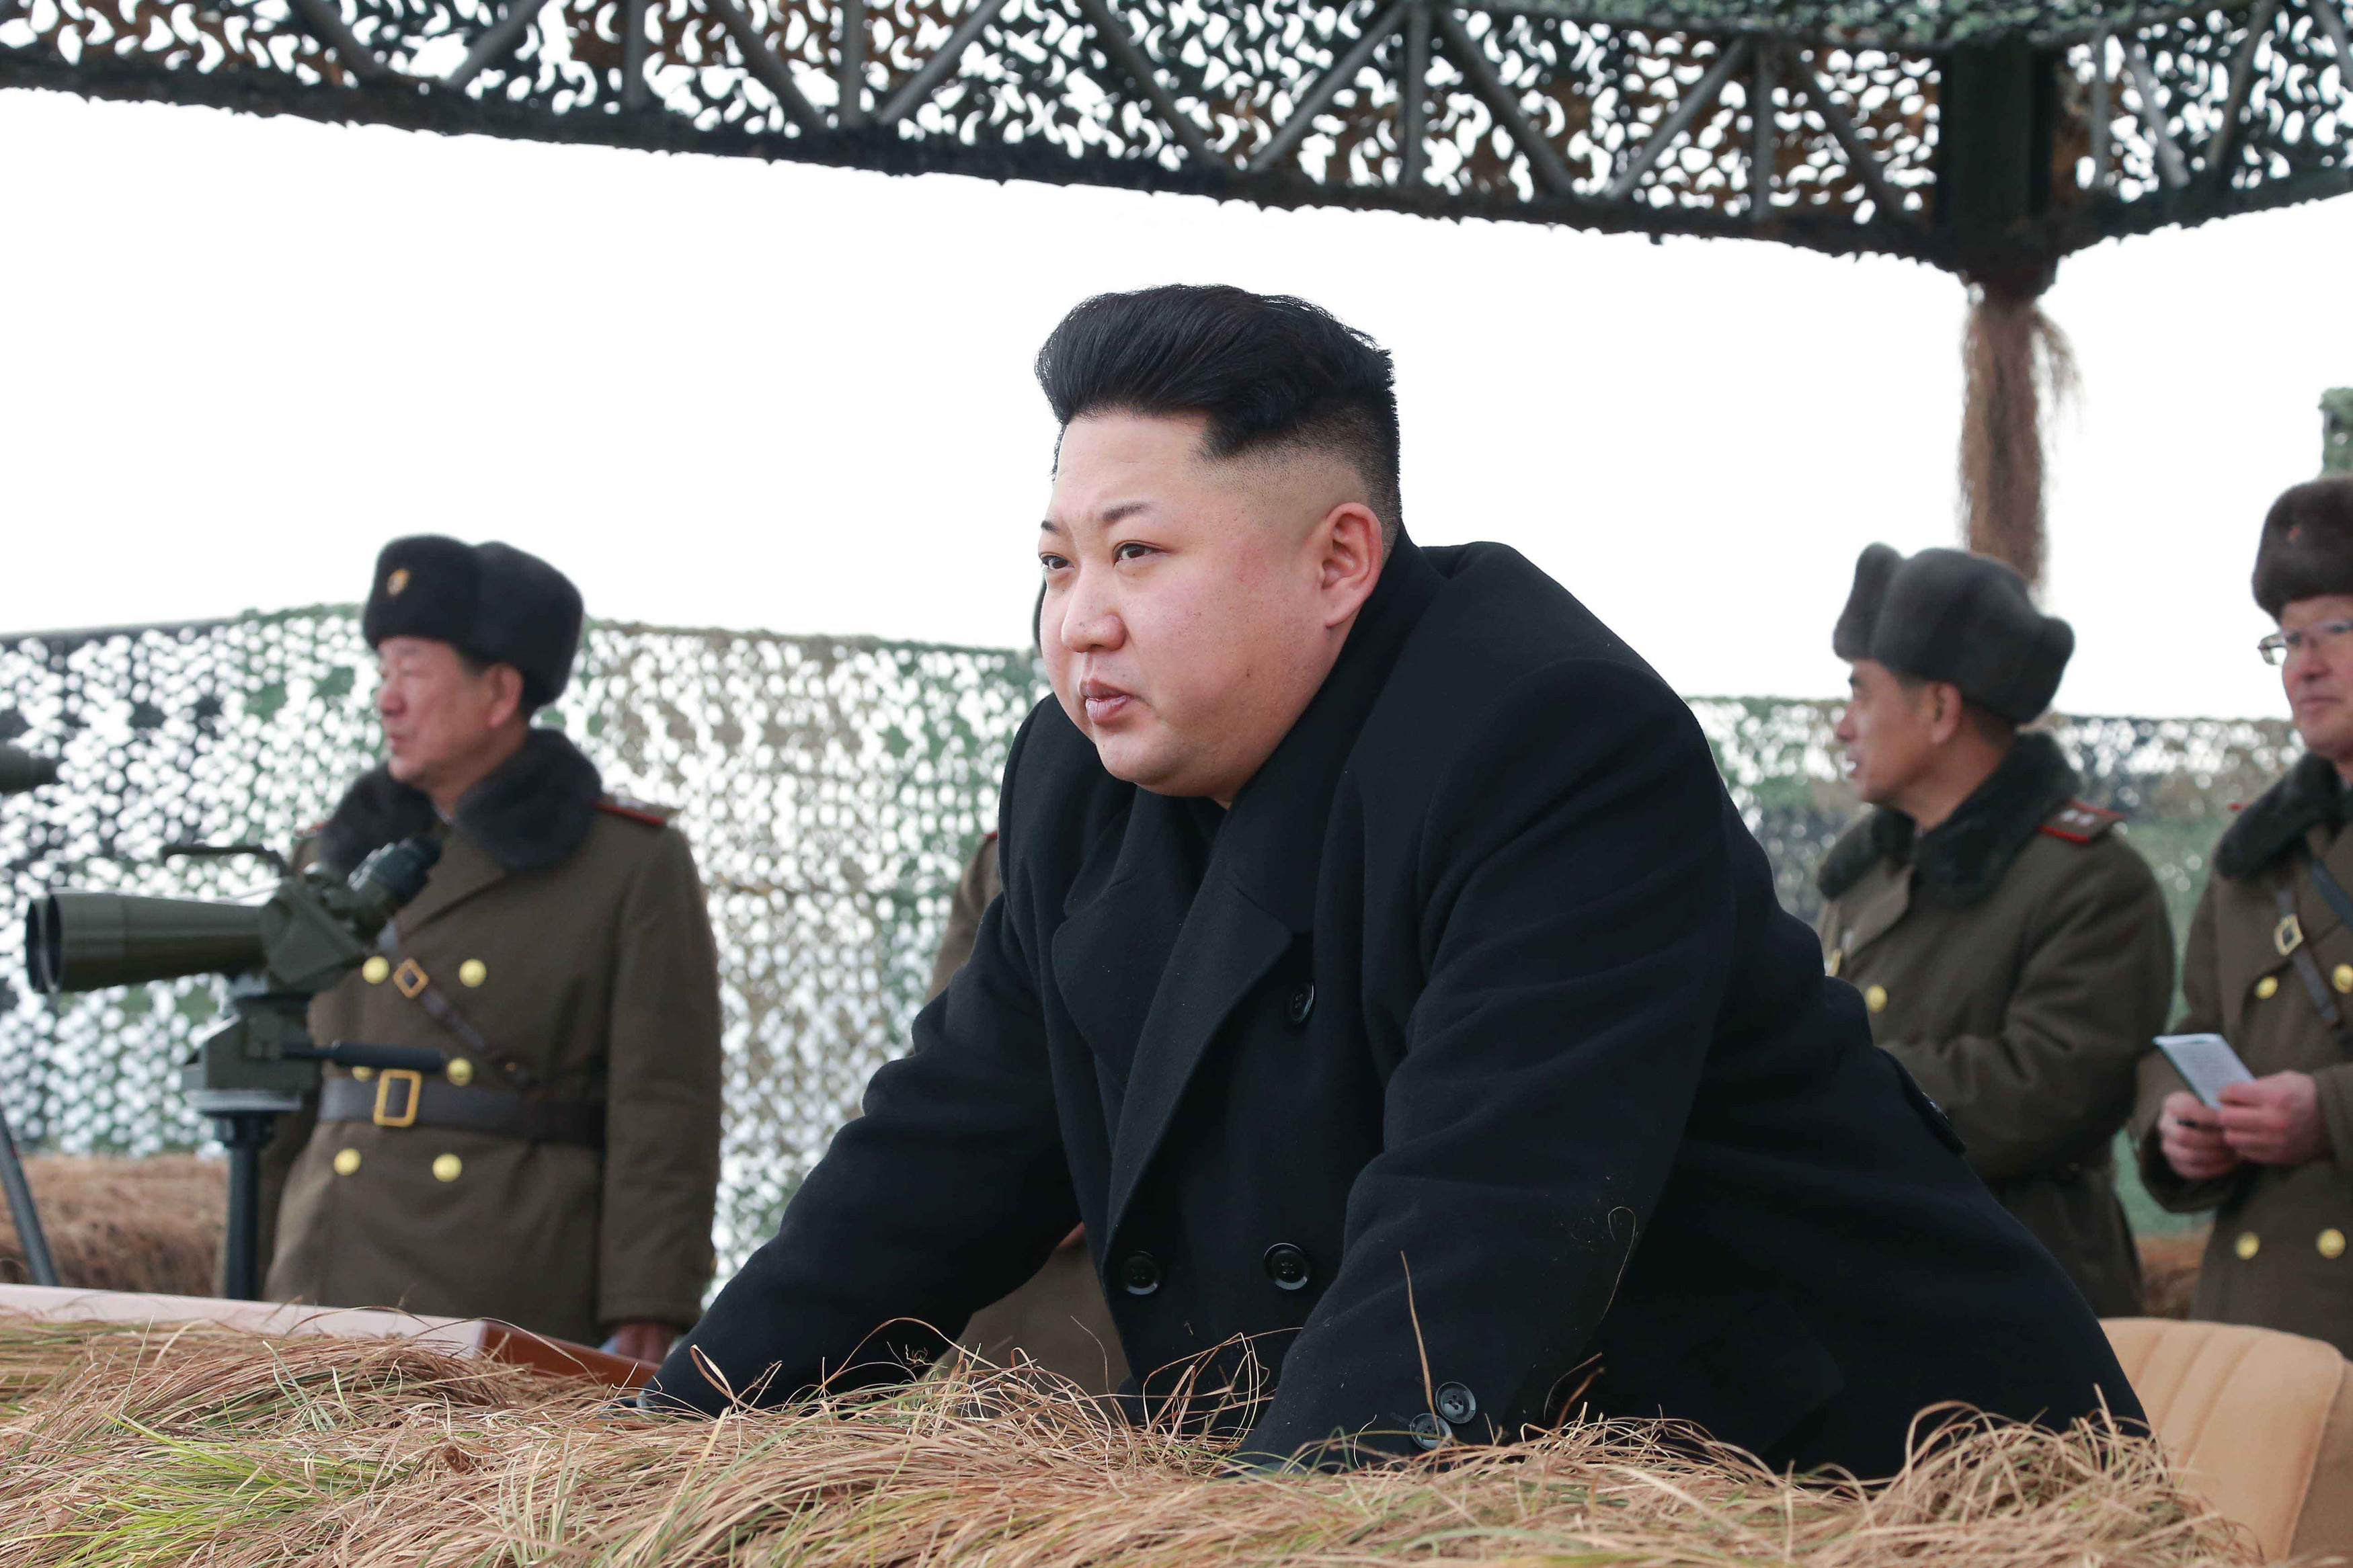 U.S. officials say North Korea preparing missile launch: report